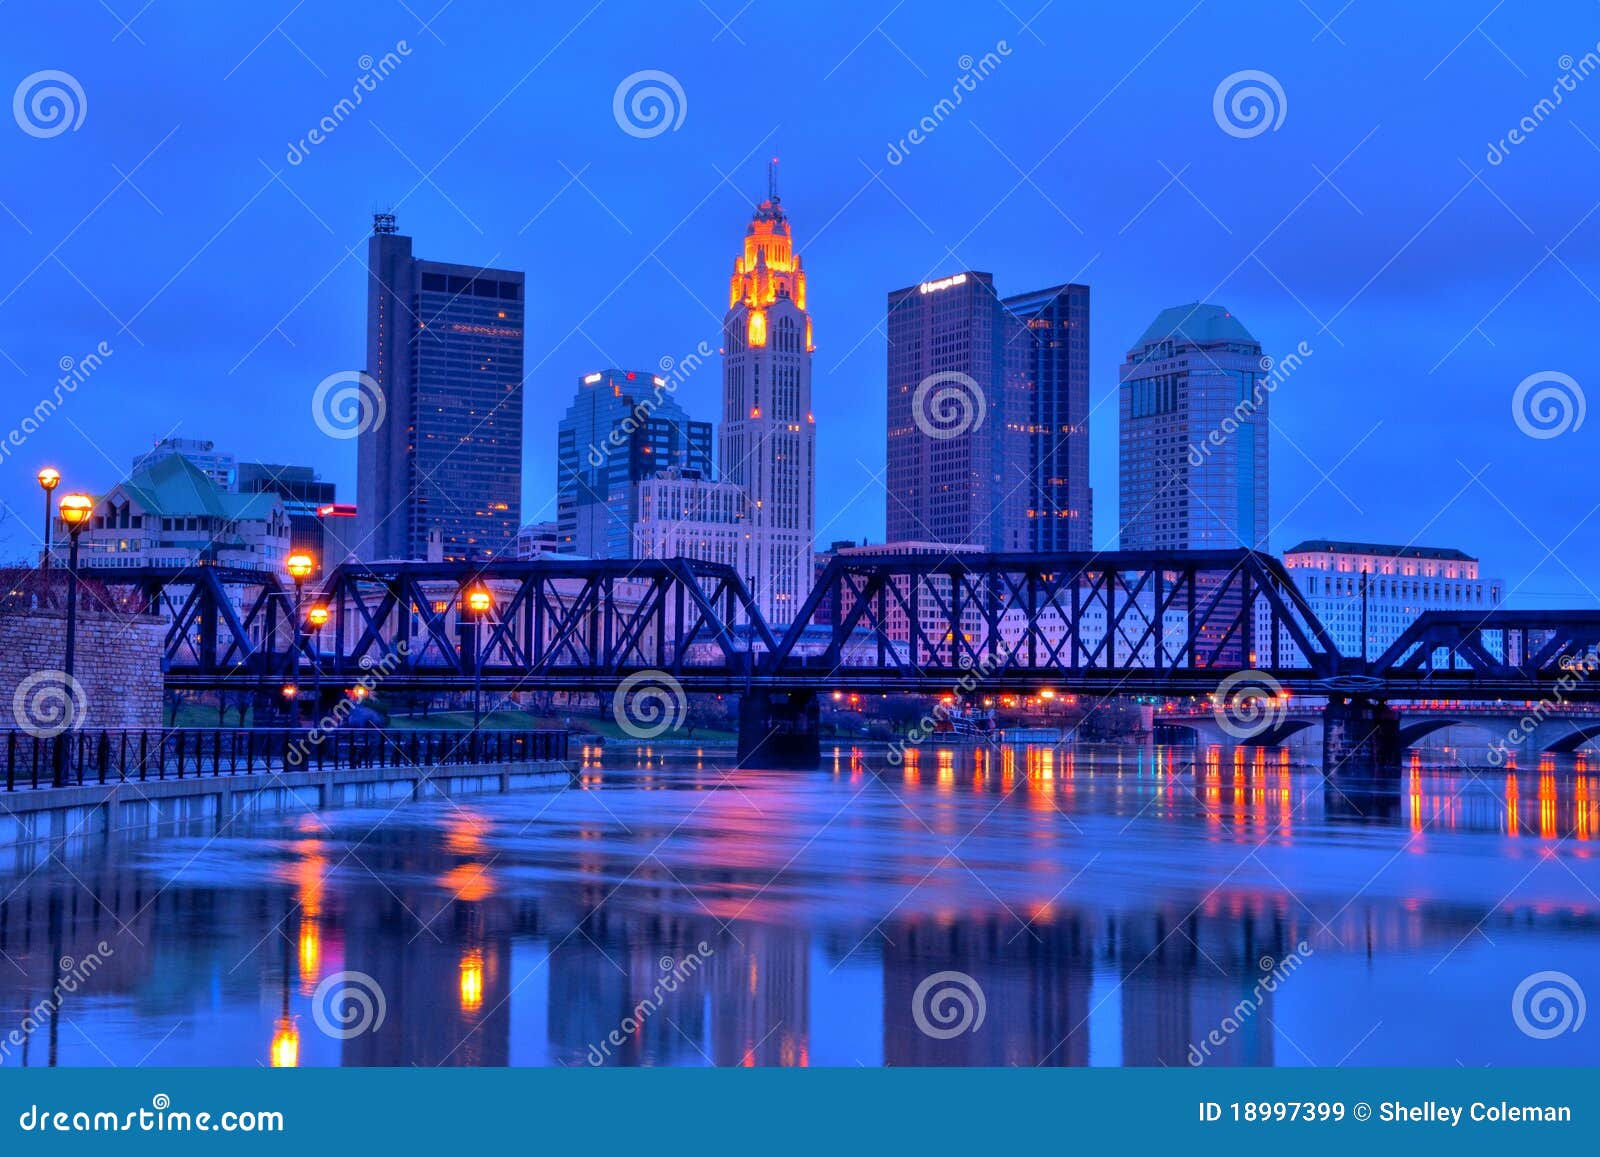 Columbus Ohio Skyline At Night Stock Image - Image of scene, exposure